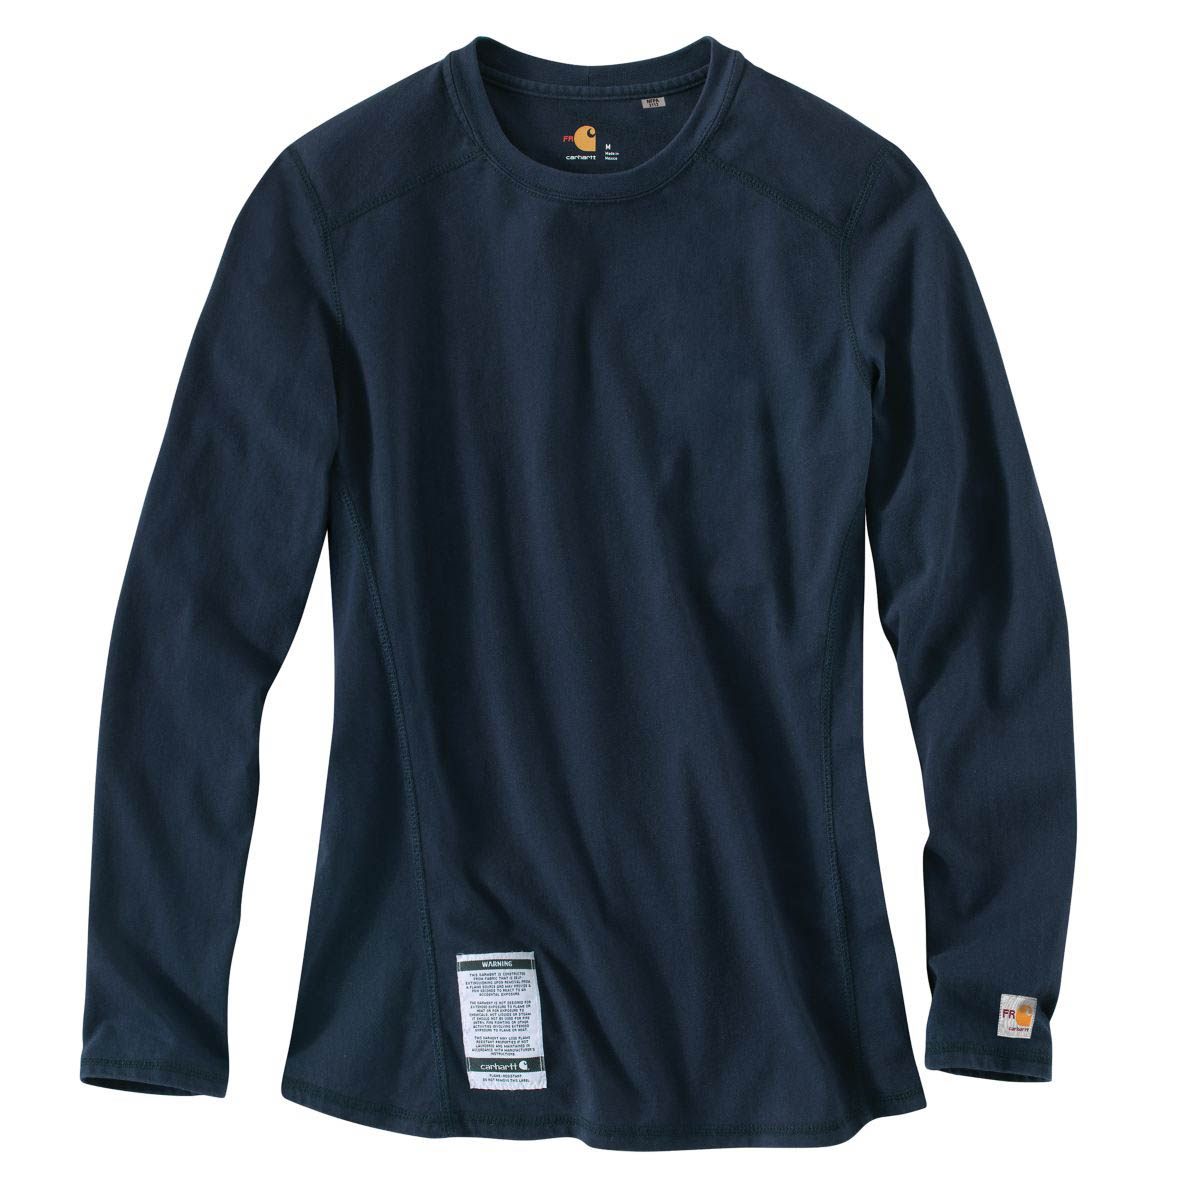 Carhartt Women's Flame Resistant Force Cotton Long Sleeve T Shirt